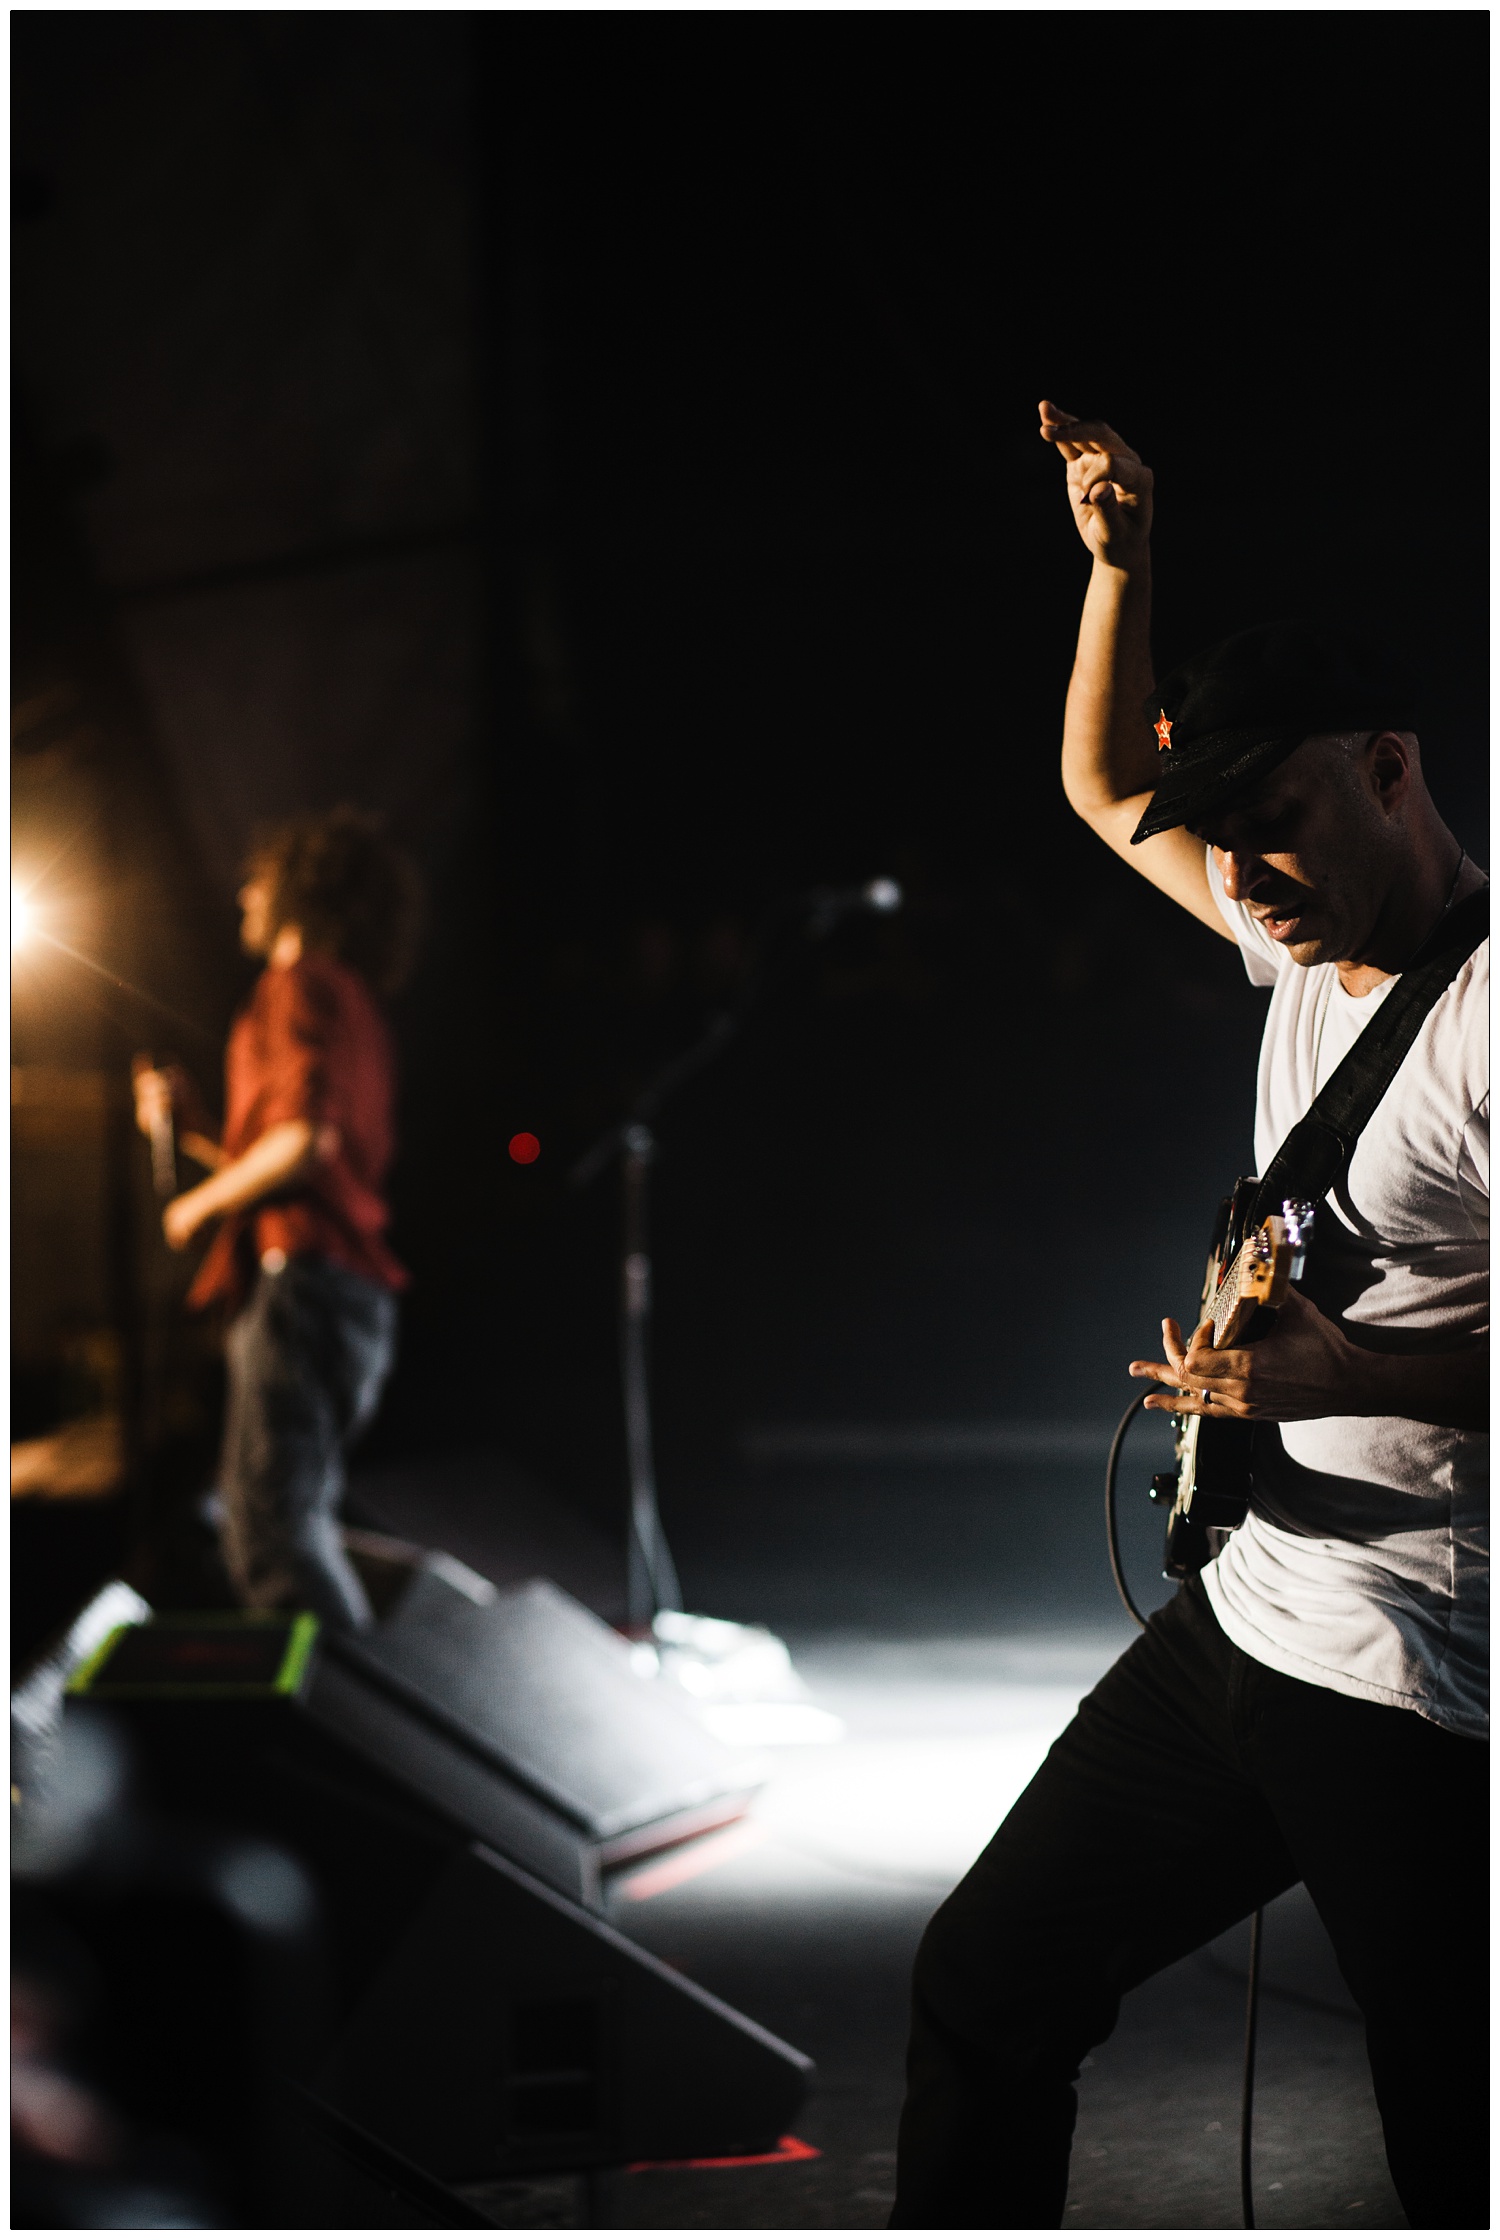 Tom Morello playing the Fender Telecaster “Sendero Luminoso”, Zack de la Rocha in the background. Rage Against the Machine gig at Finsbury Park.